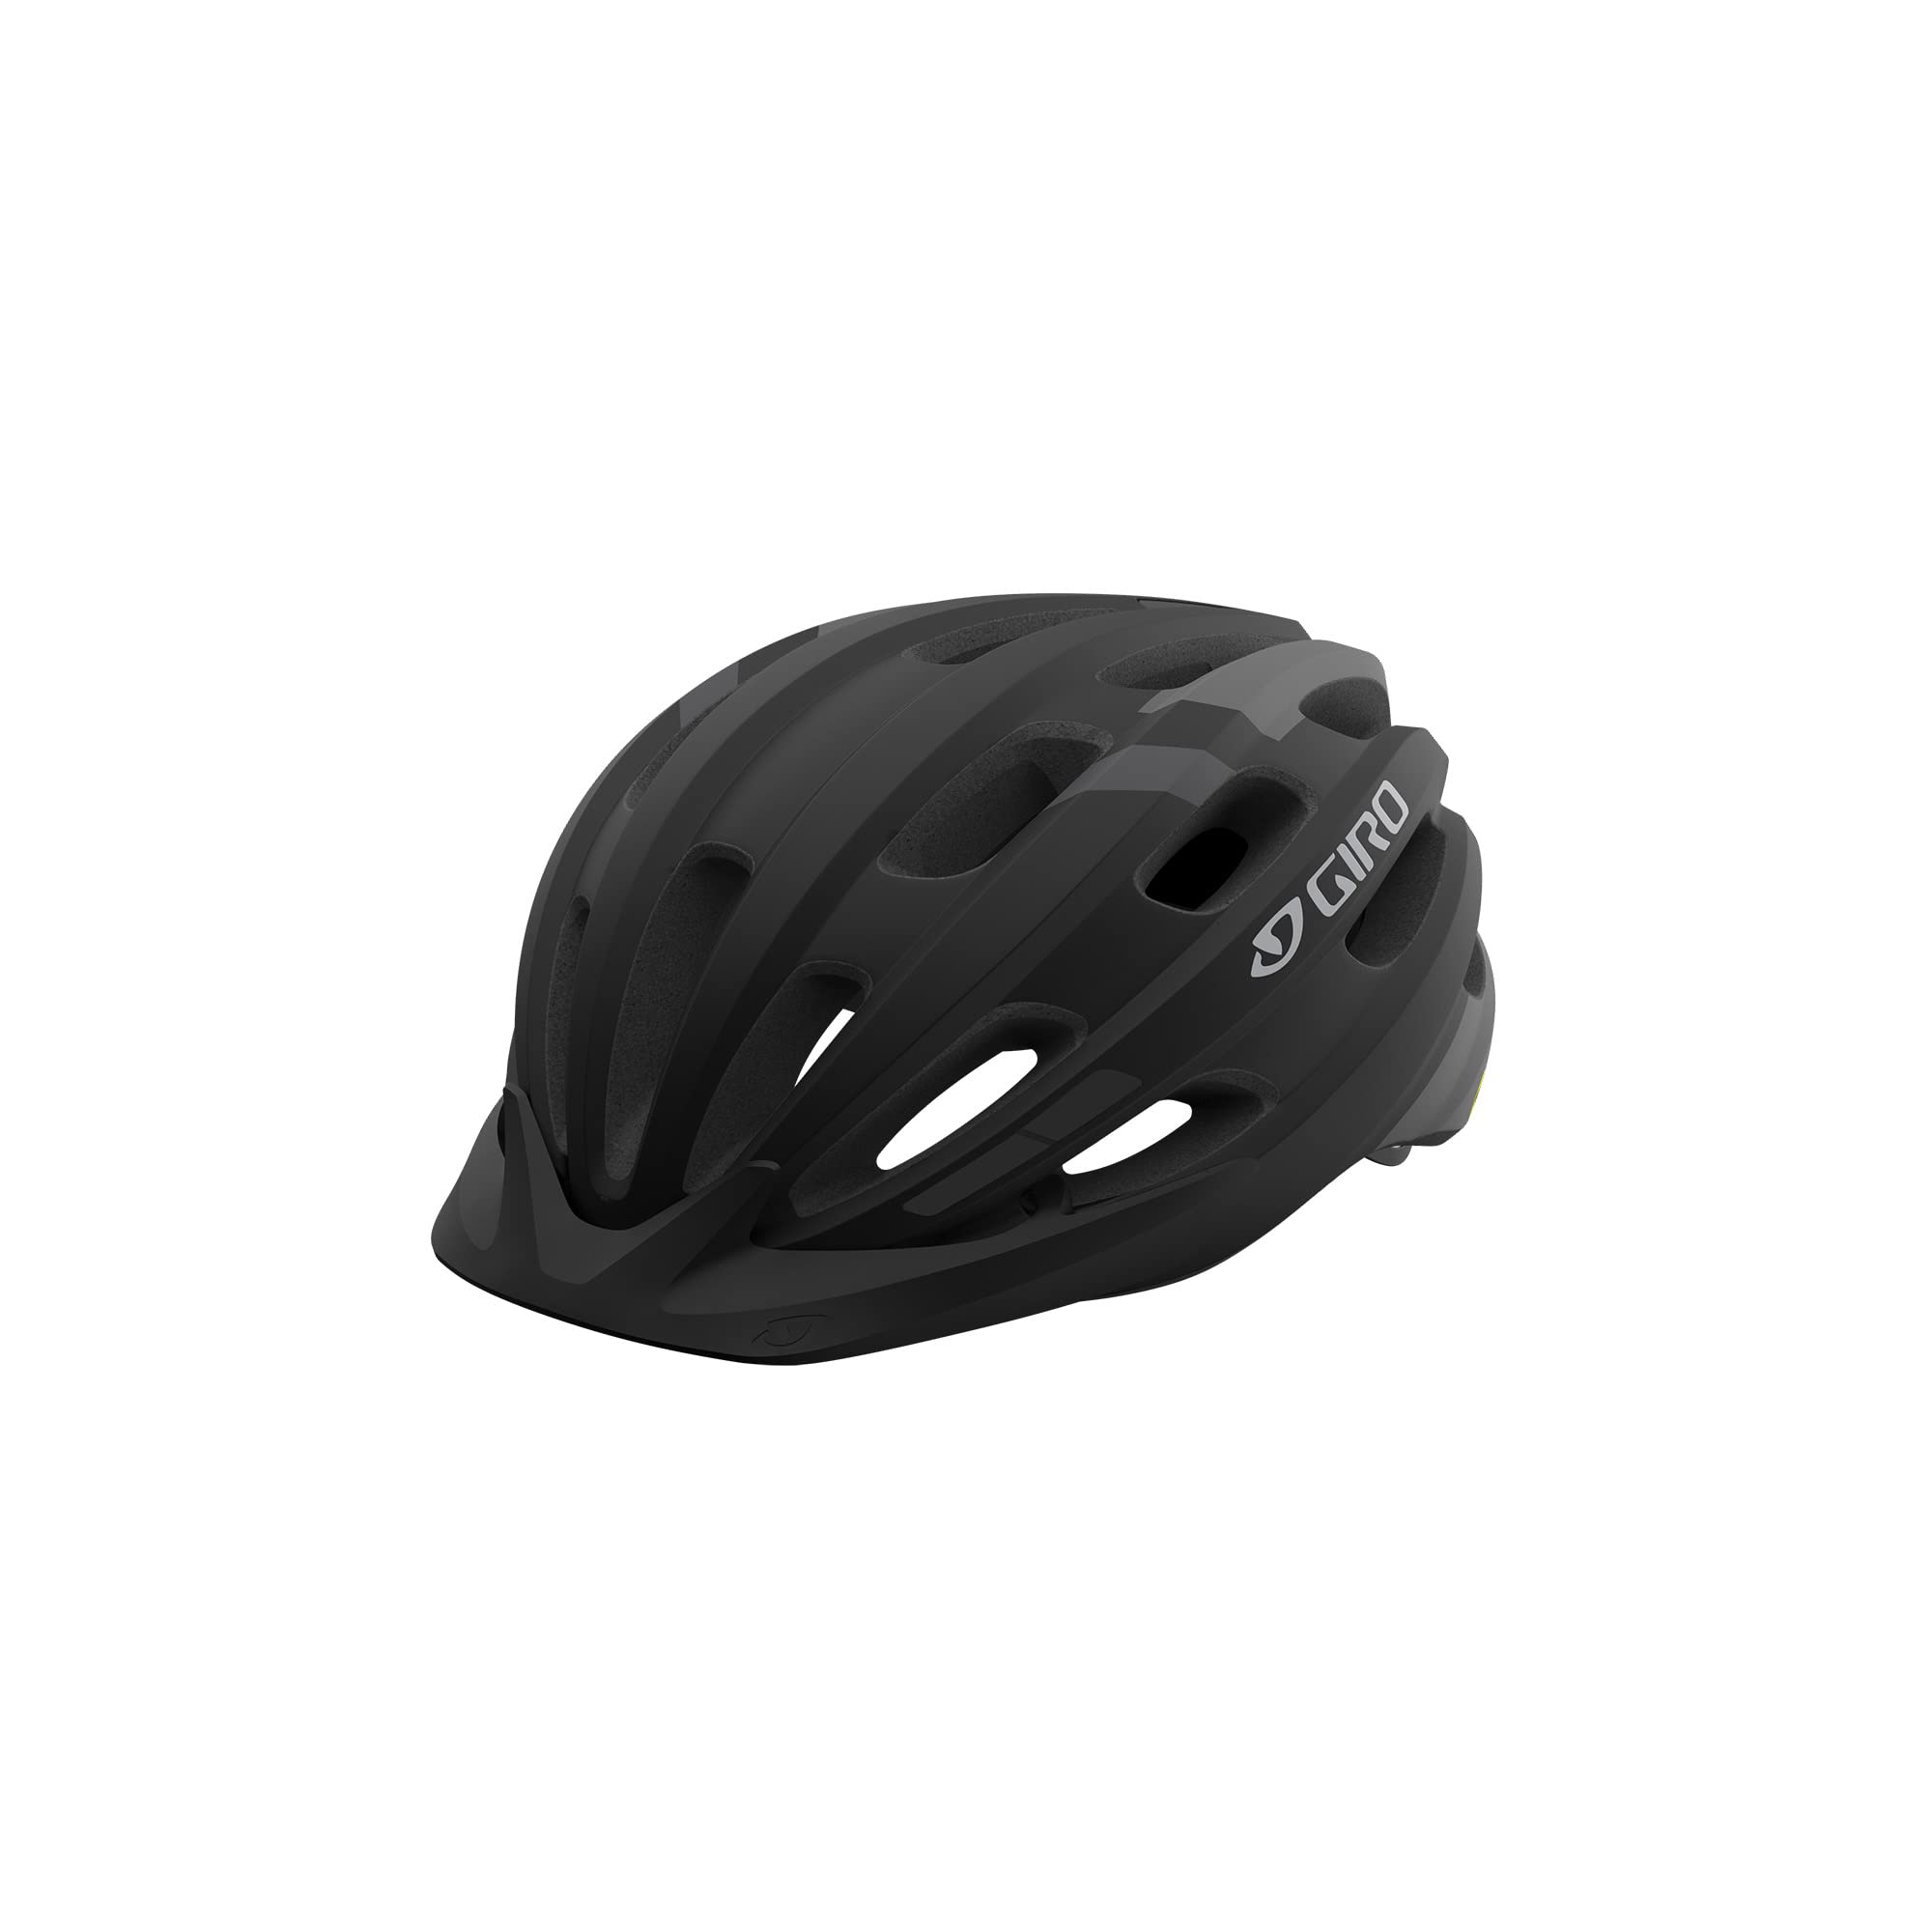 Giro एमआईपीएस वयस्क मनोरंजक साइक्लिंग हेलमेट पंजीकृत कर...